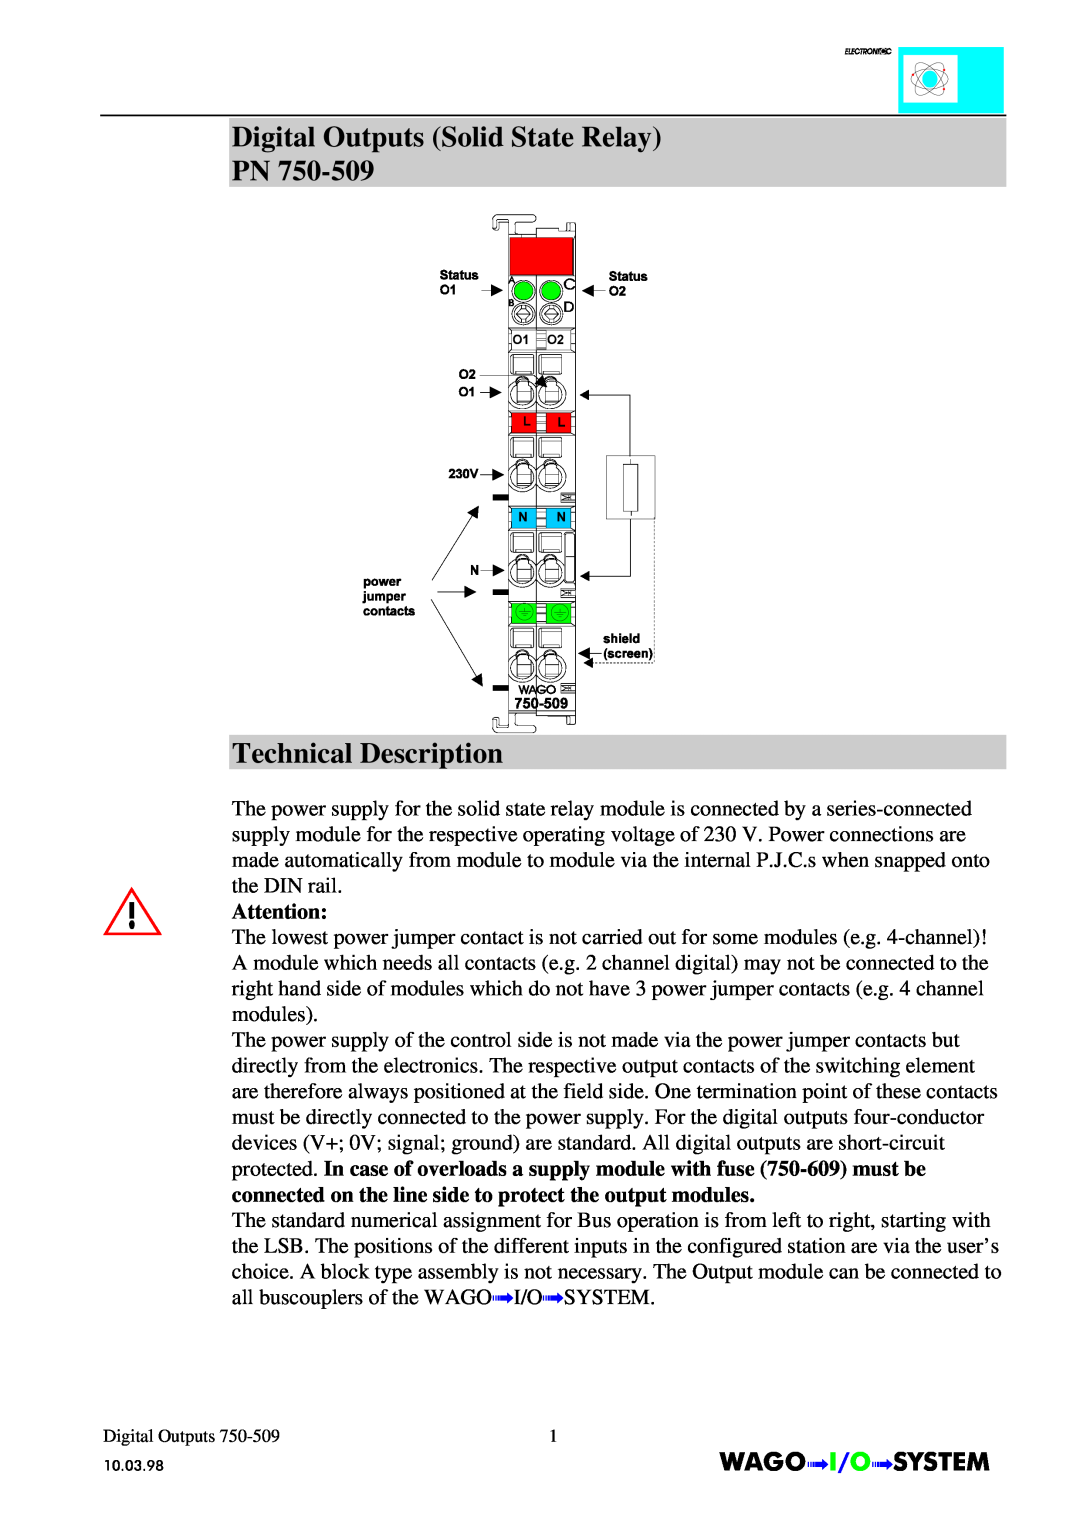 Quatech INTERBUS S manual Digital Outputs Solid State Relay PN Technical Description 